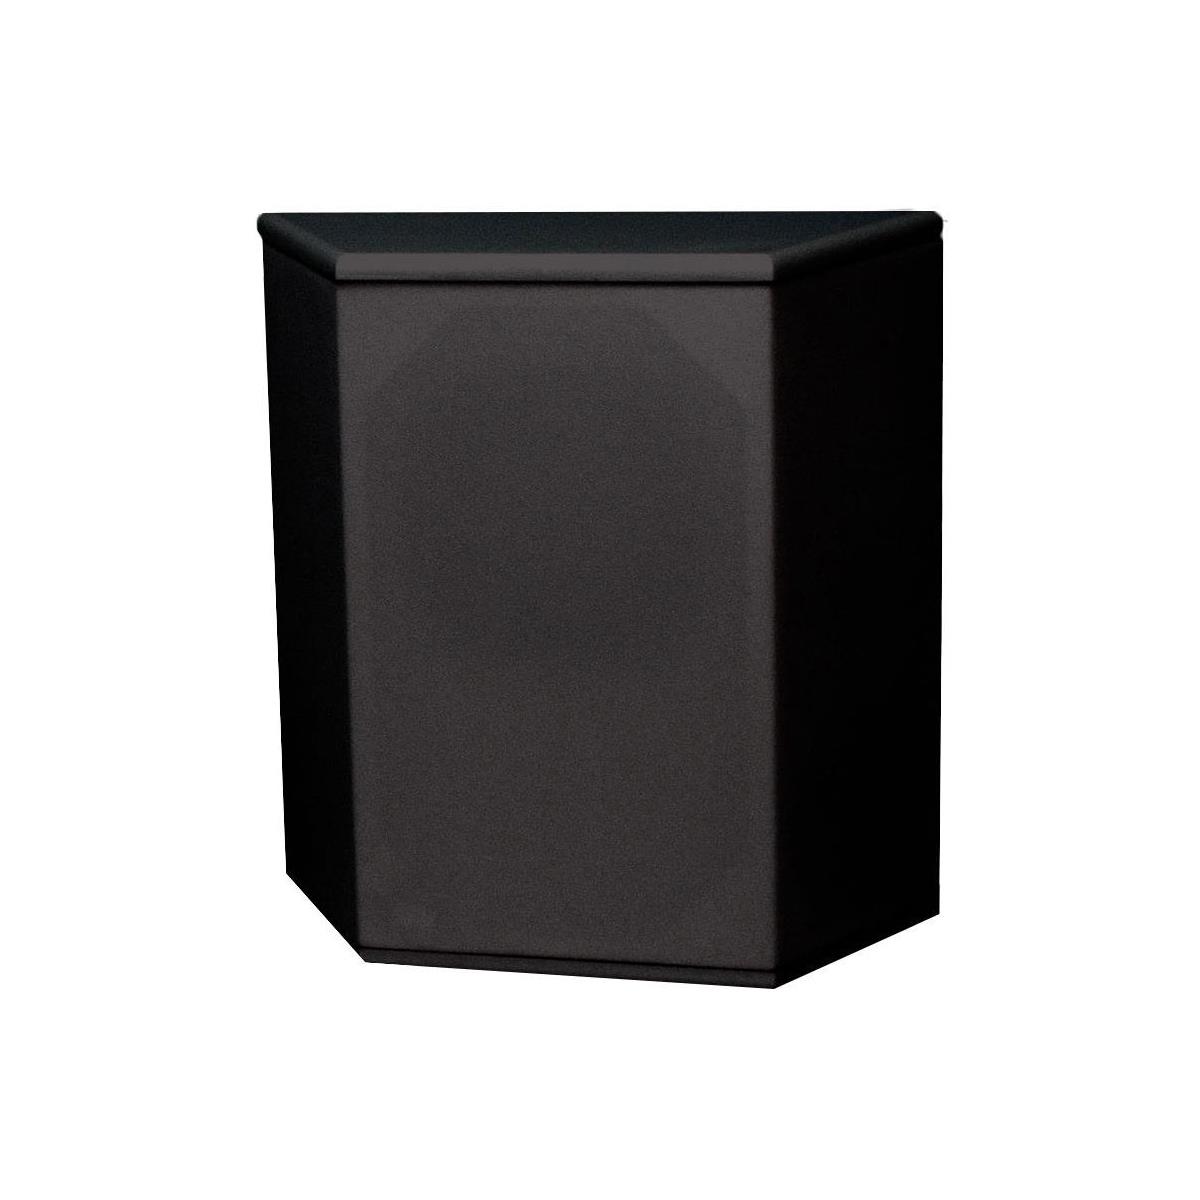 

Phase Technology PC-Surround II 6.5" 3-Way Surround Speaker, Black